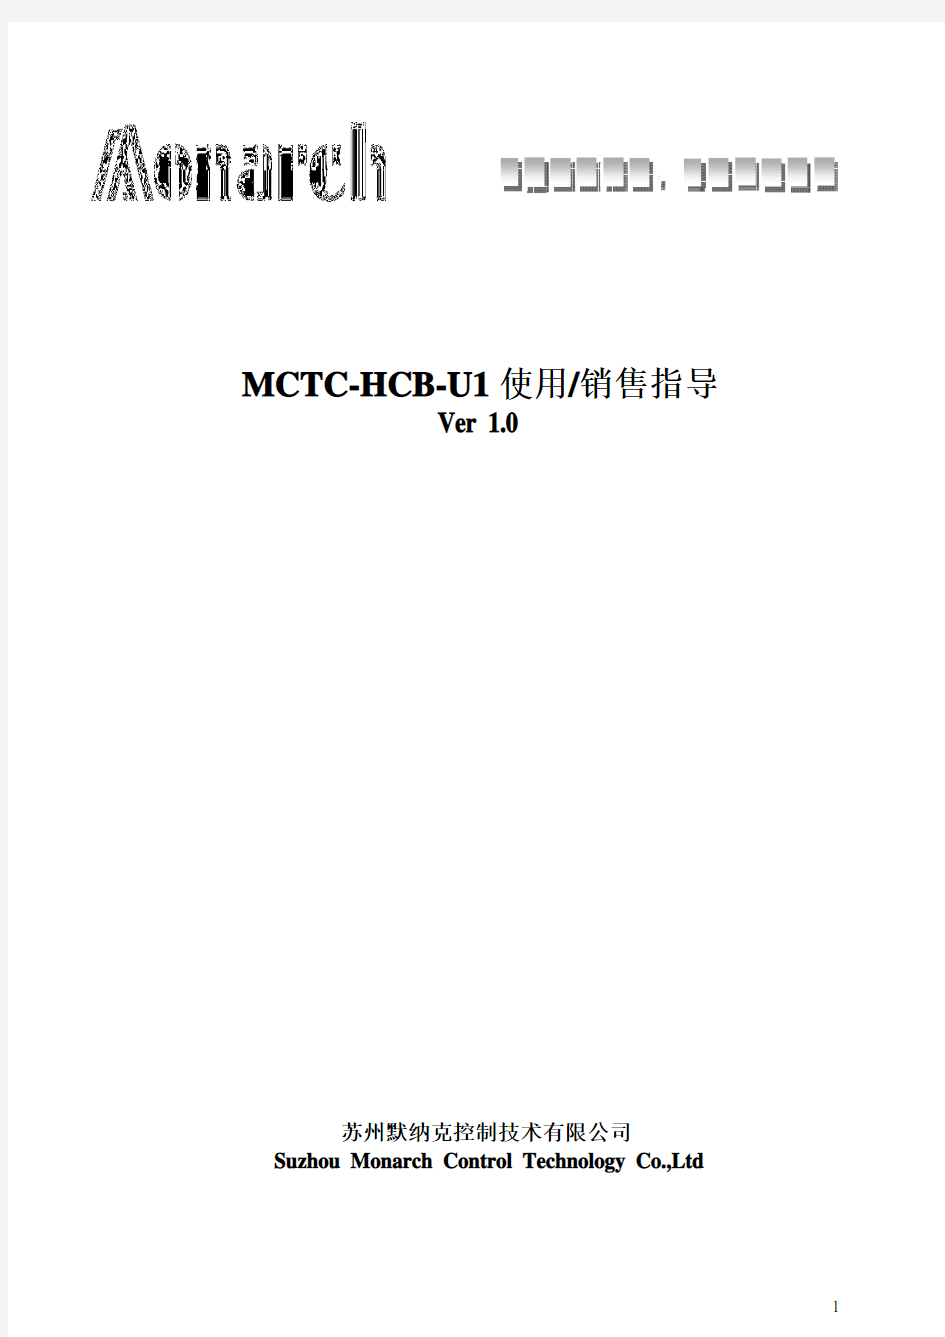 MCTC-HCB-U1(U1蓝底白字,U2黑底白字、U3黑底黄字)使用及销售指导-V1.0